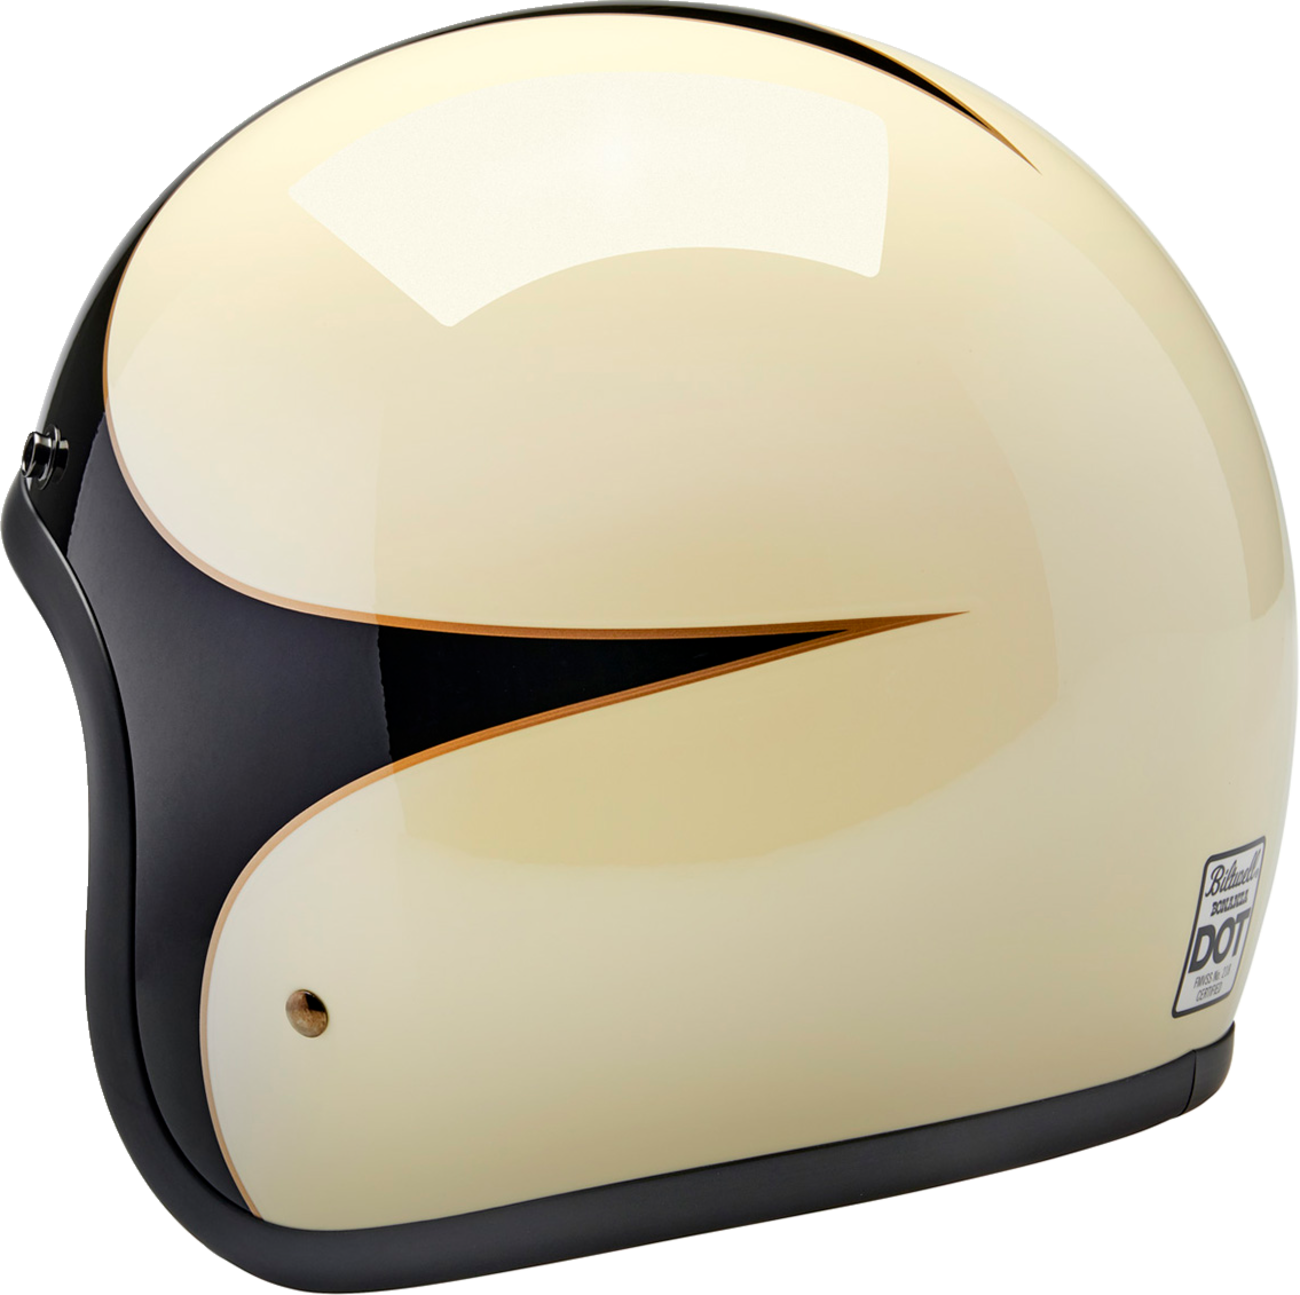 BILTWELL Bonanza Helmet - Gloss Vintage White/Black Scallop - 2XL 1001-559-206